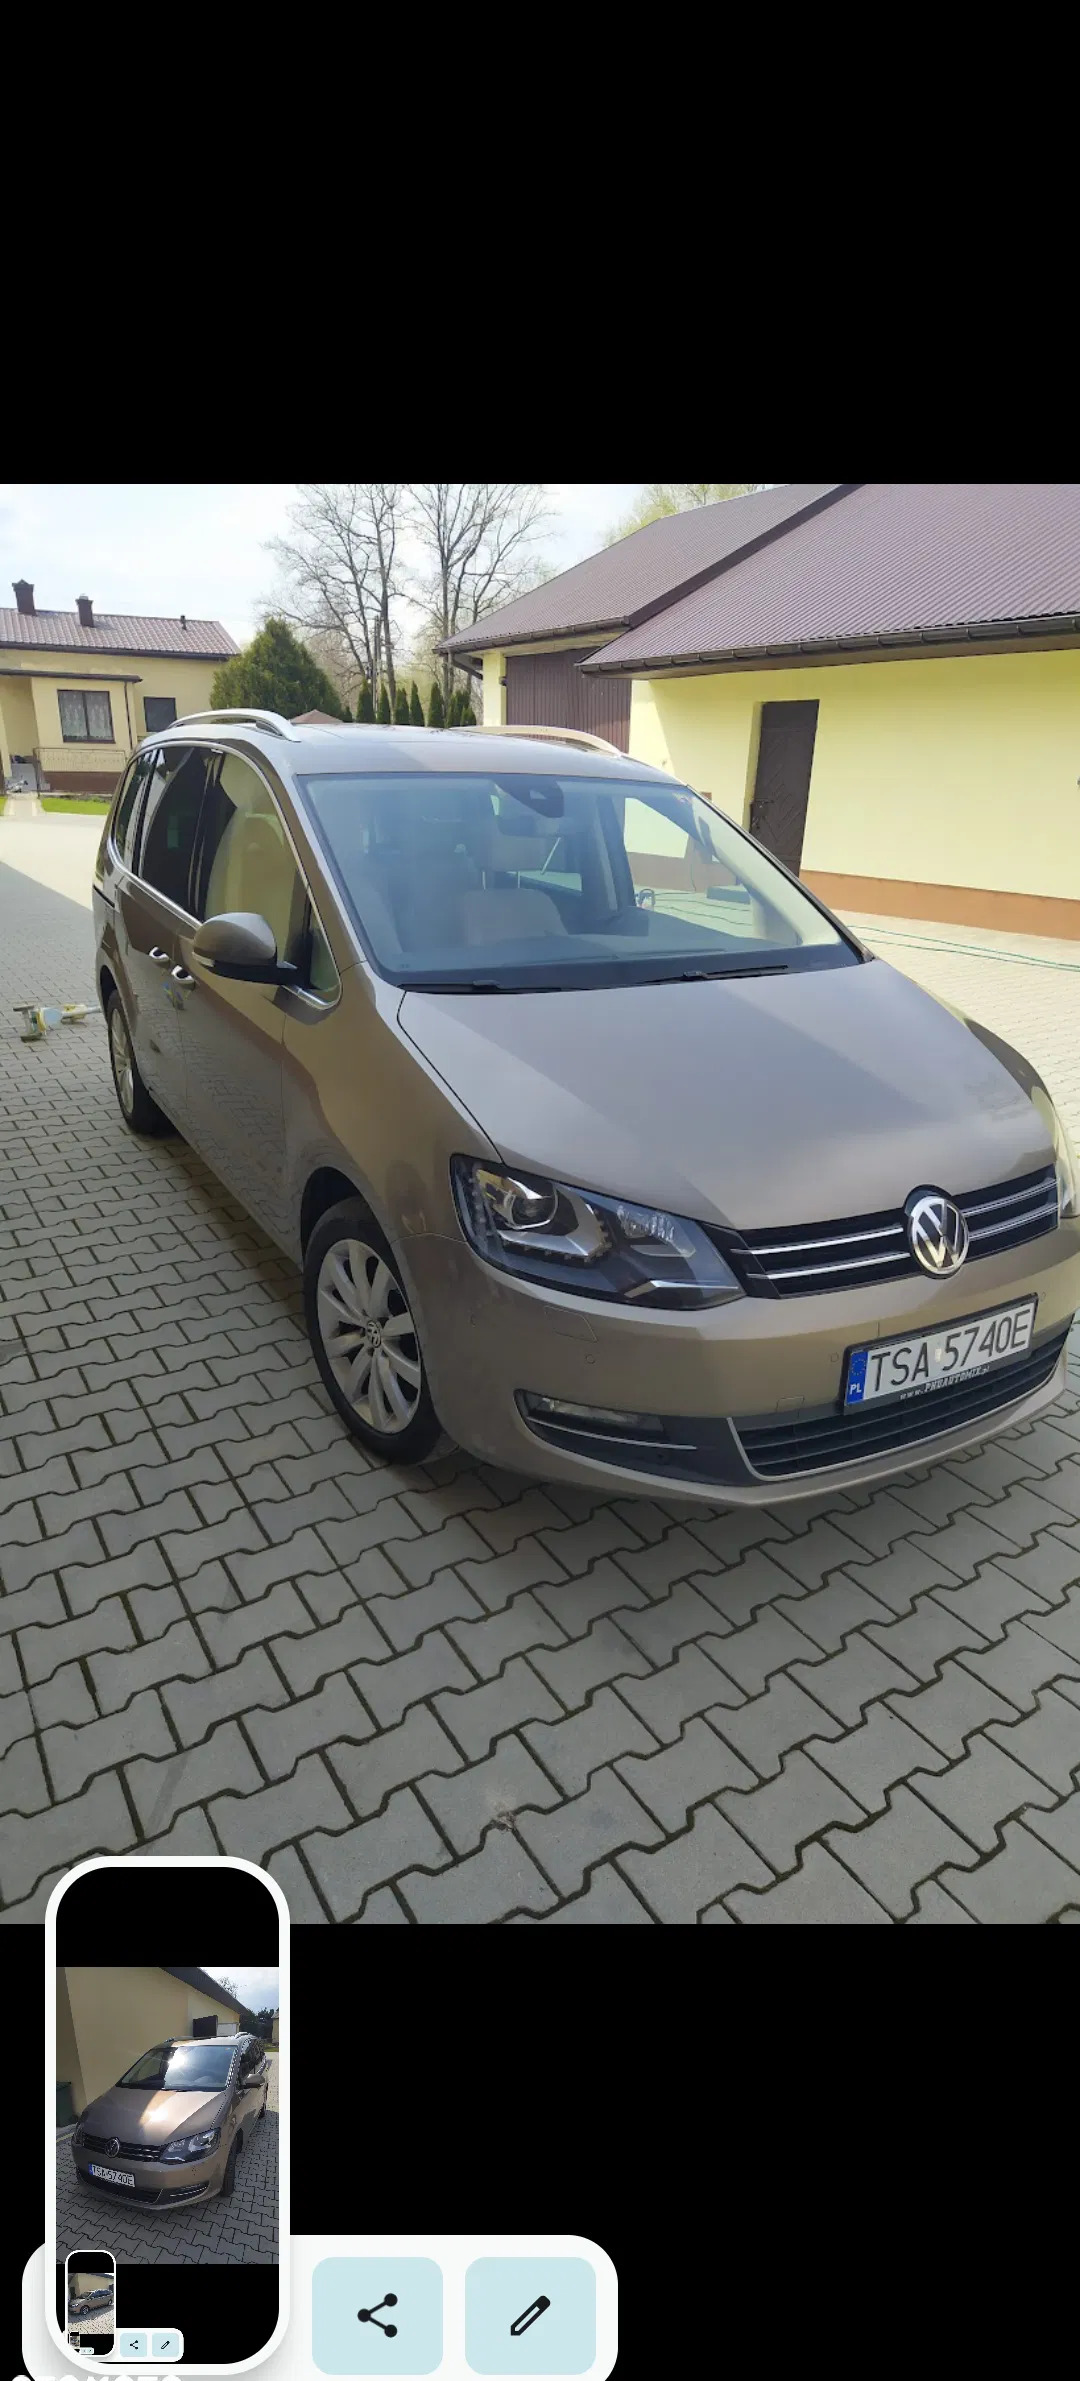 volkswagen sharan Volkswagen Sharan cena 65900 przebieg: 233000, rok produkcji 2015 z Sandomierz